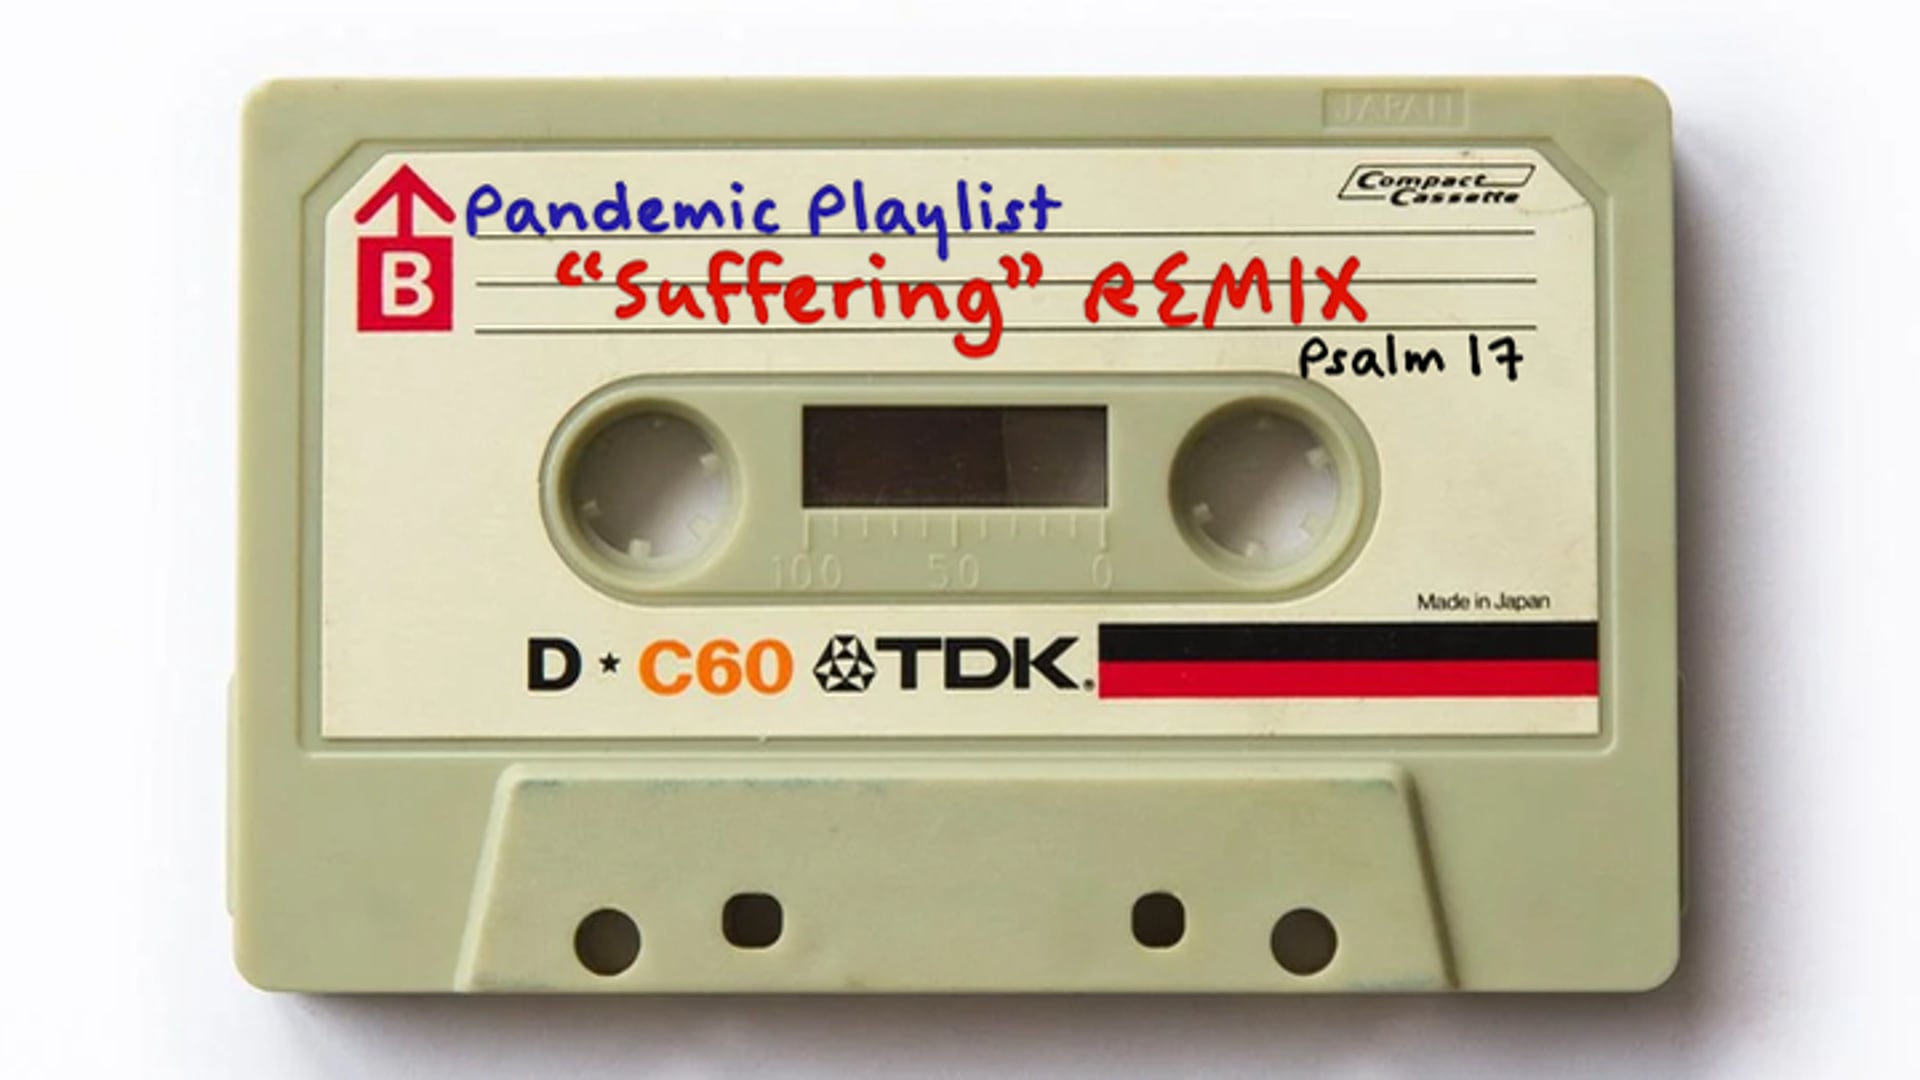 Pandemic Playlist - "Suffering" Remix